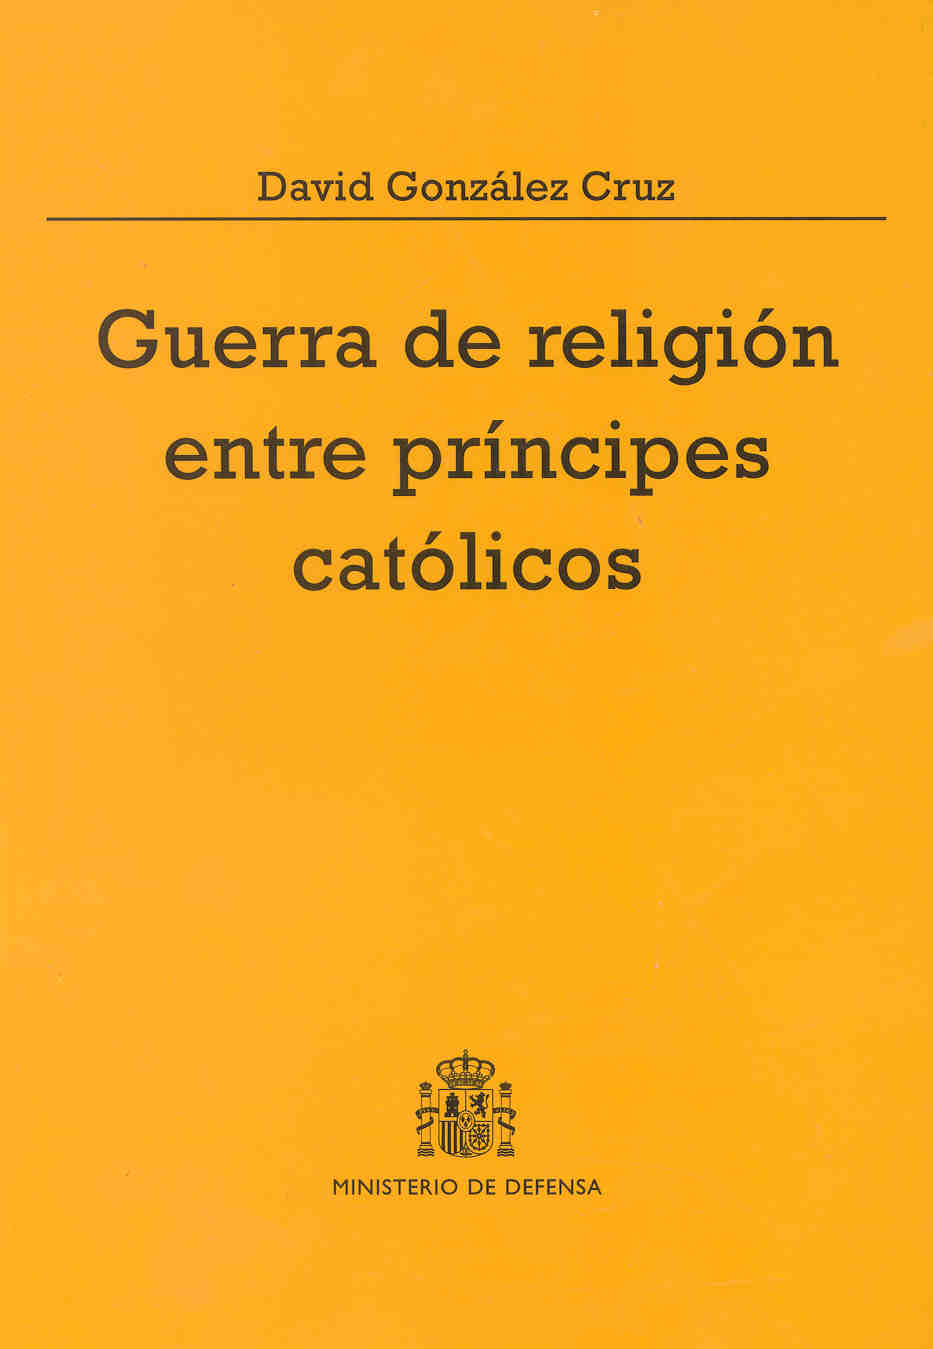 Imagen de portada del libro Guerra de religión entre príncipes católicos